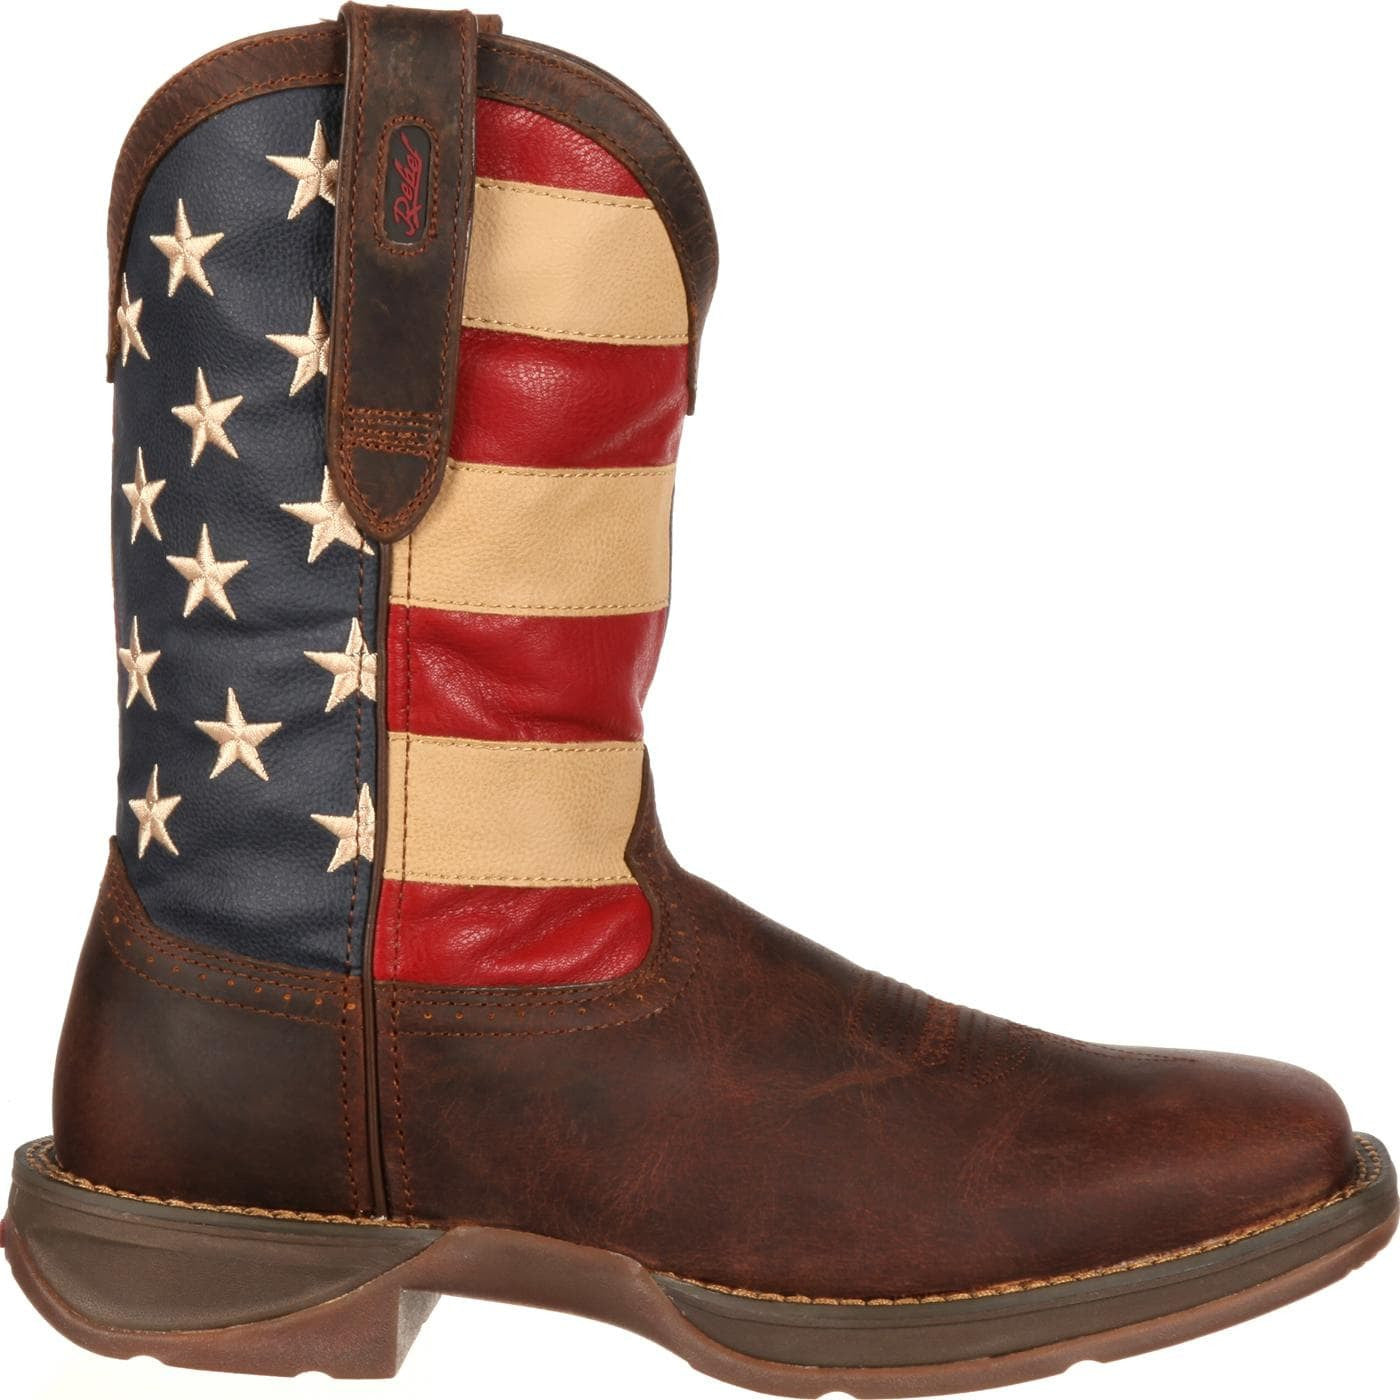 Durango Men’s Rebel Patriotic Pull-On Flag Boots DB5554 - Wild West Boot Store - 2